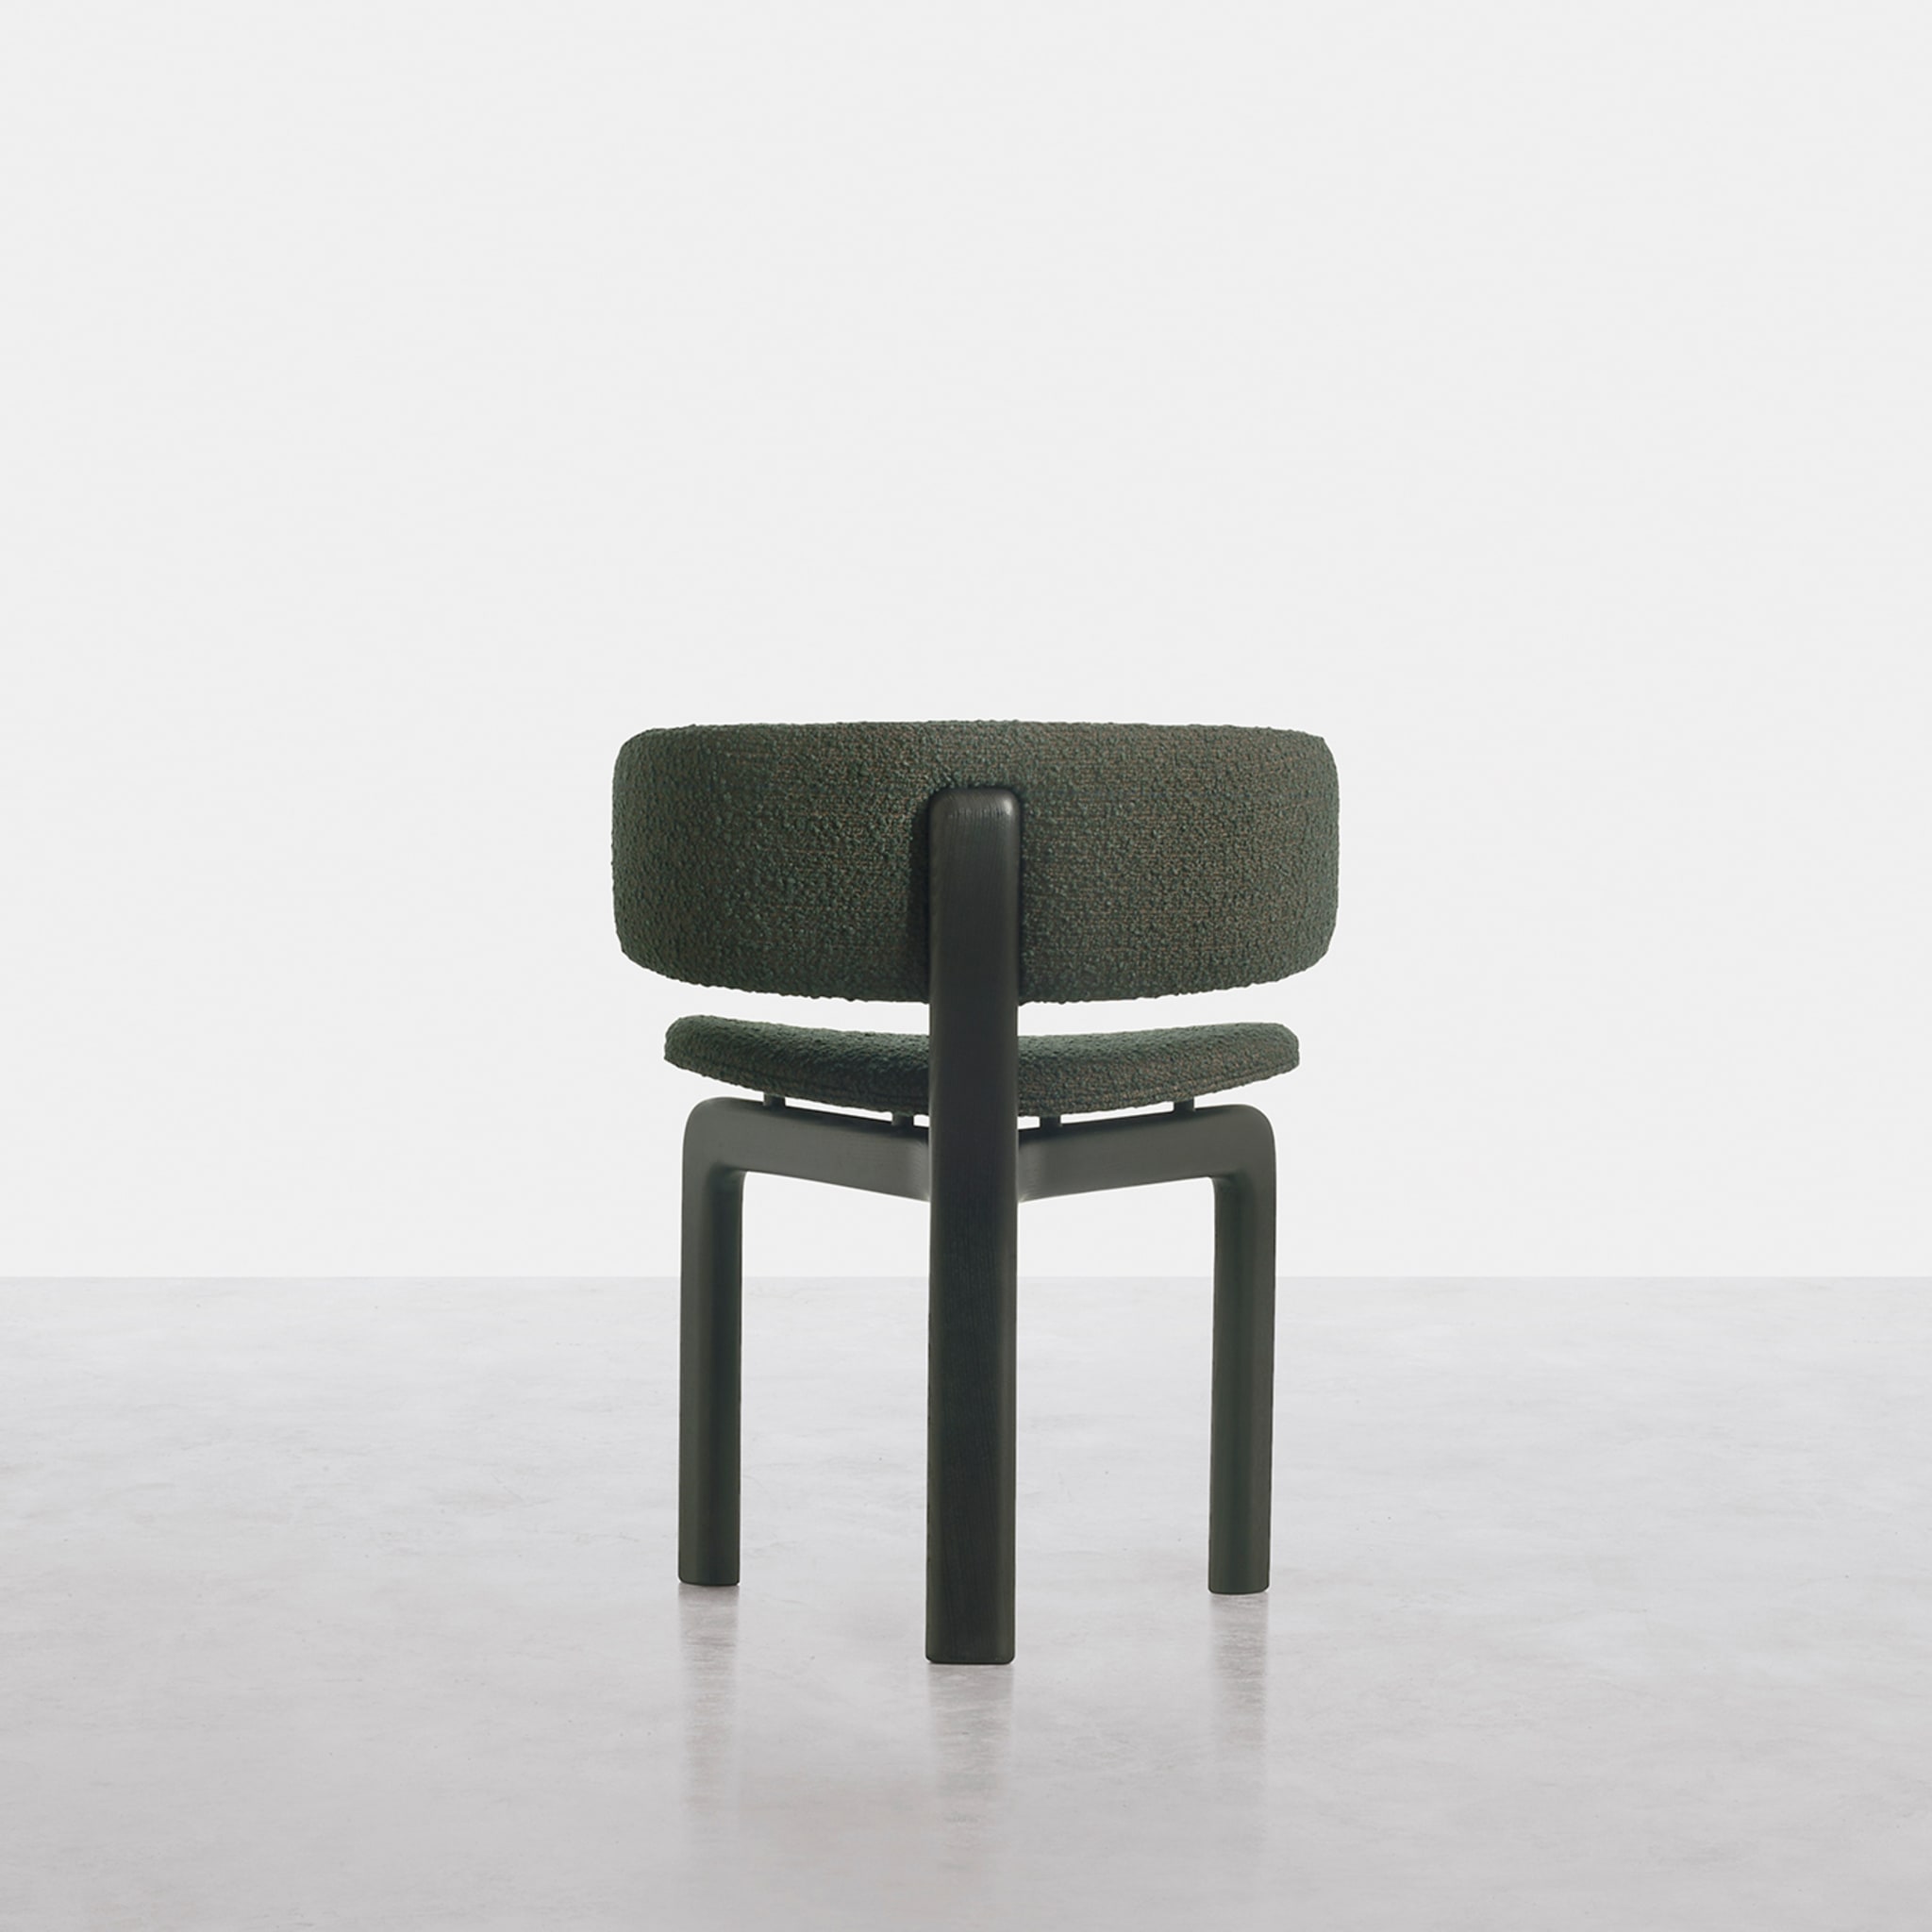 Hunt Green Chair by Dainelli Studio  - Alternative view 1